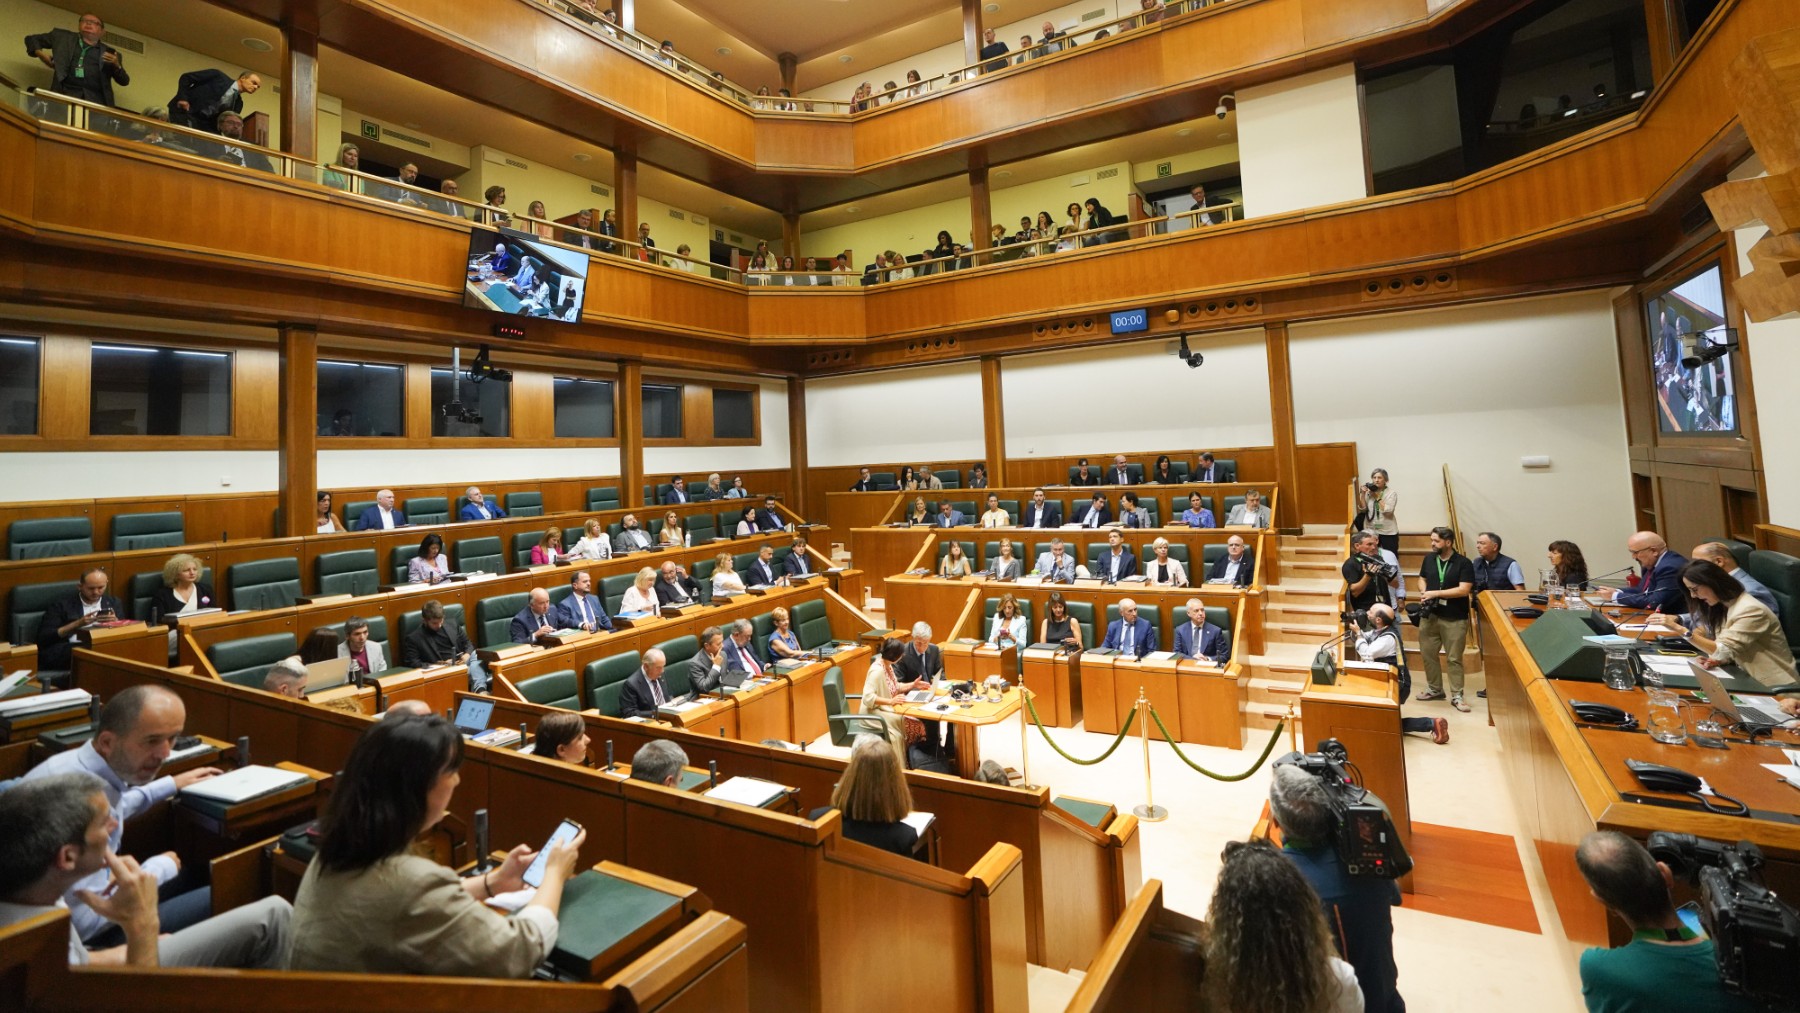 Vista general del Parlamento vasco. (Foto: Ep)